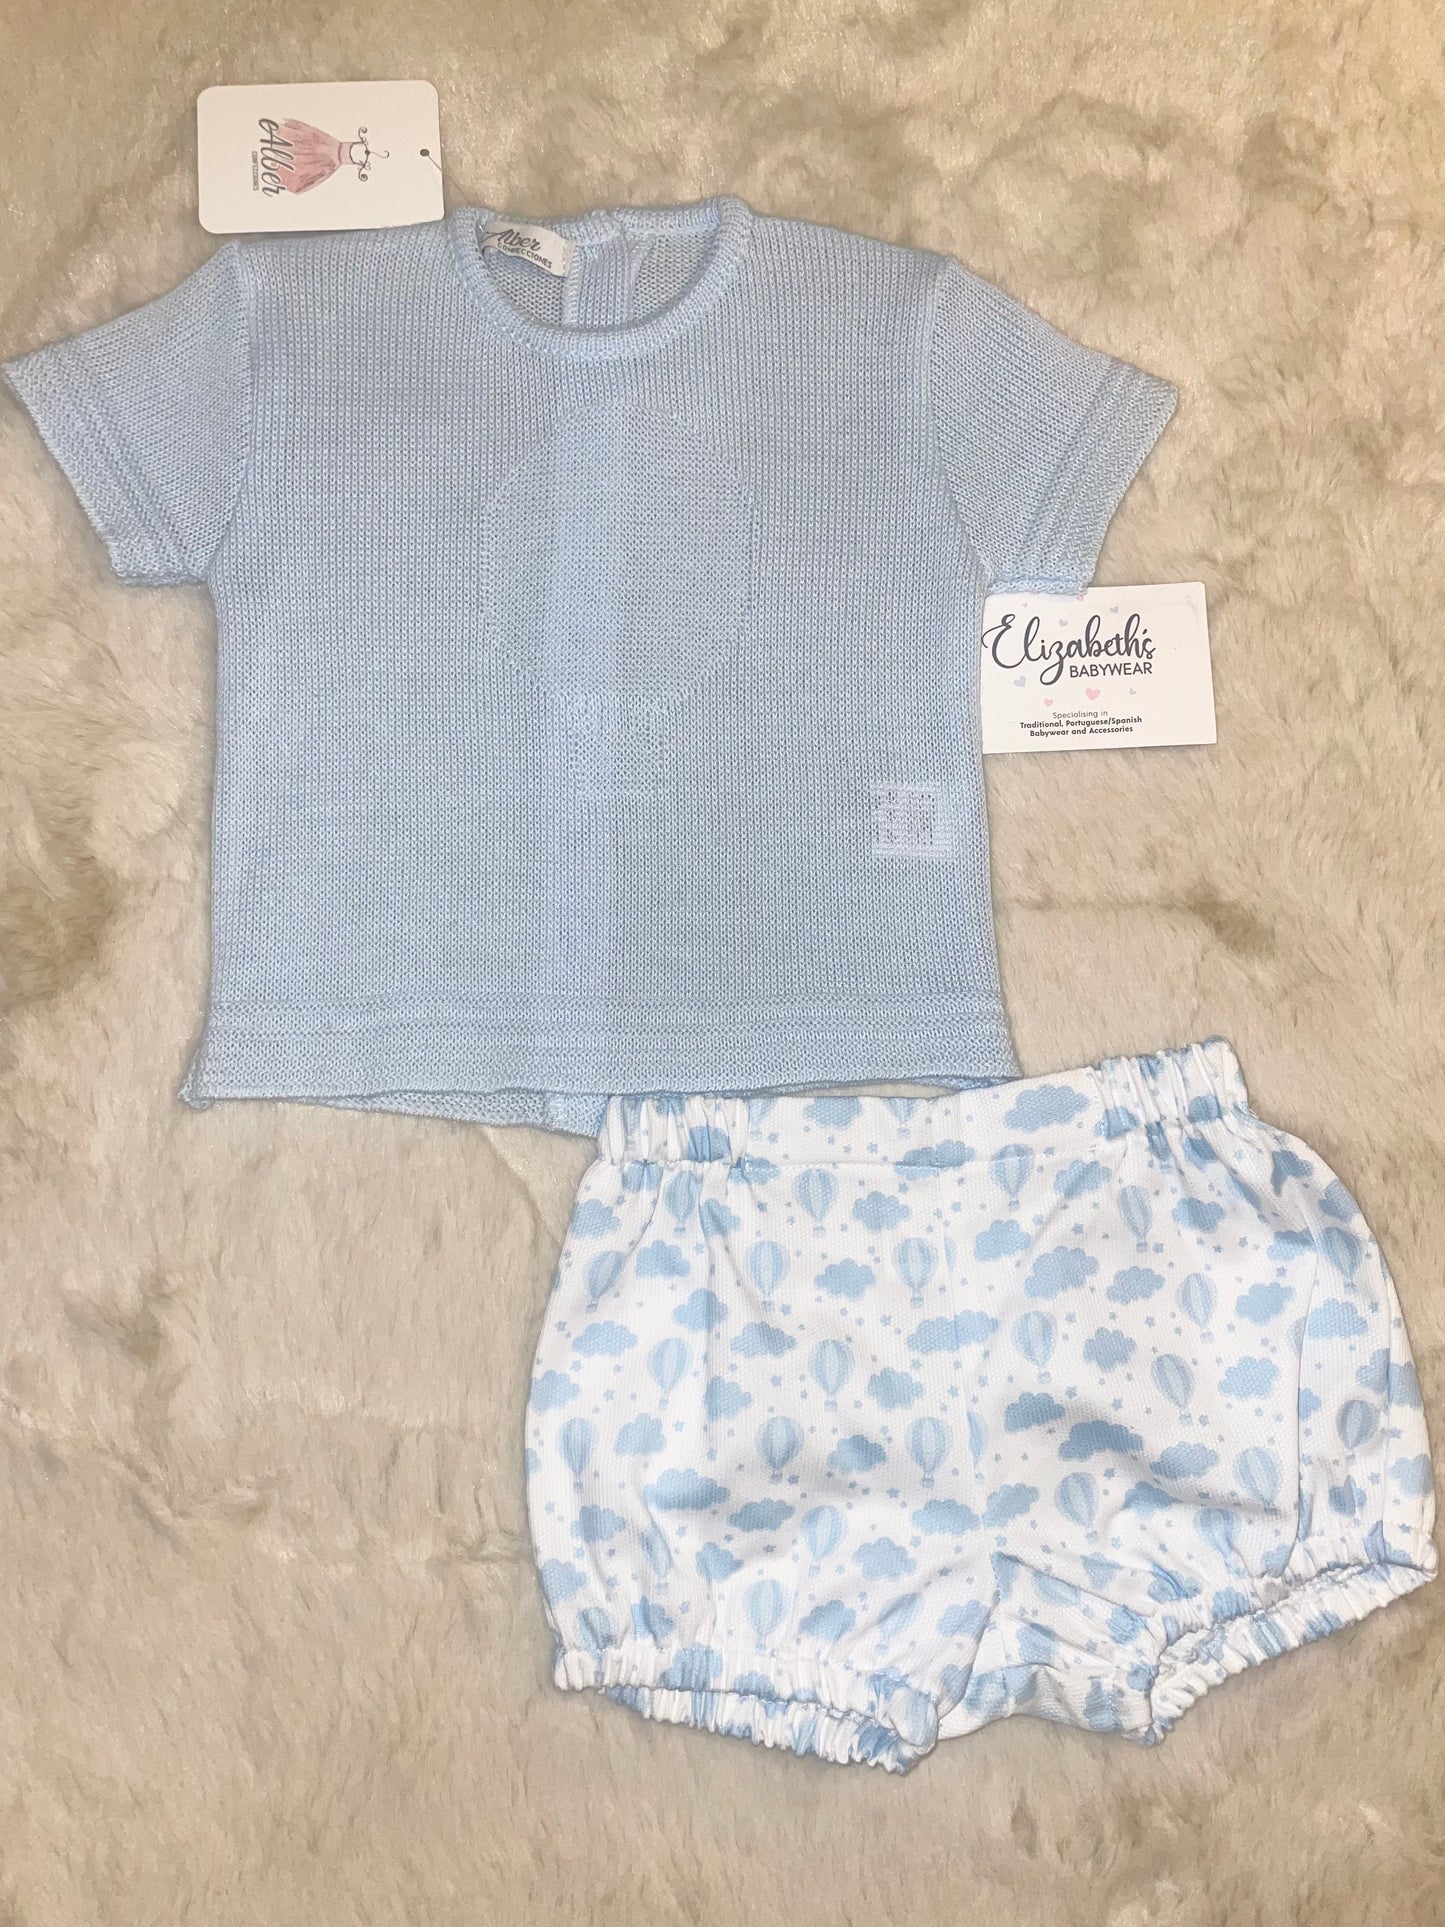 Alber Confecciones Boys Blue Spanish Knit Top & Blue And White Cloud Print Short Set